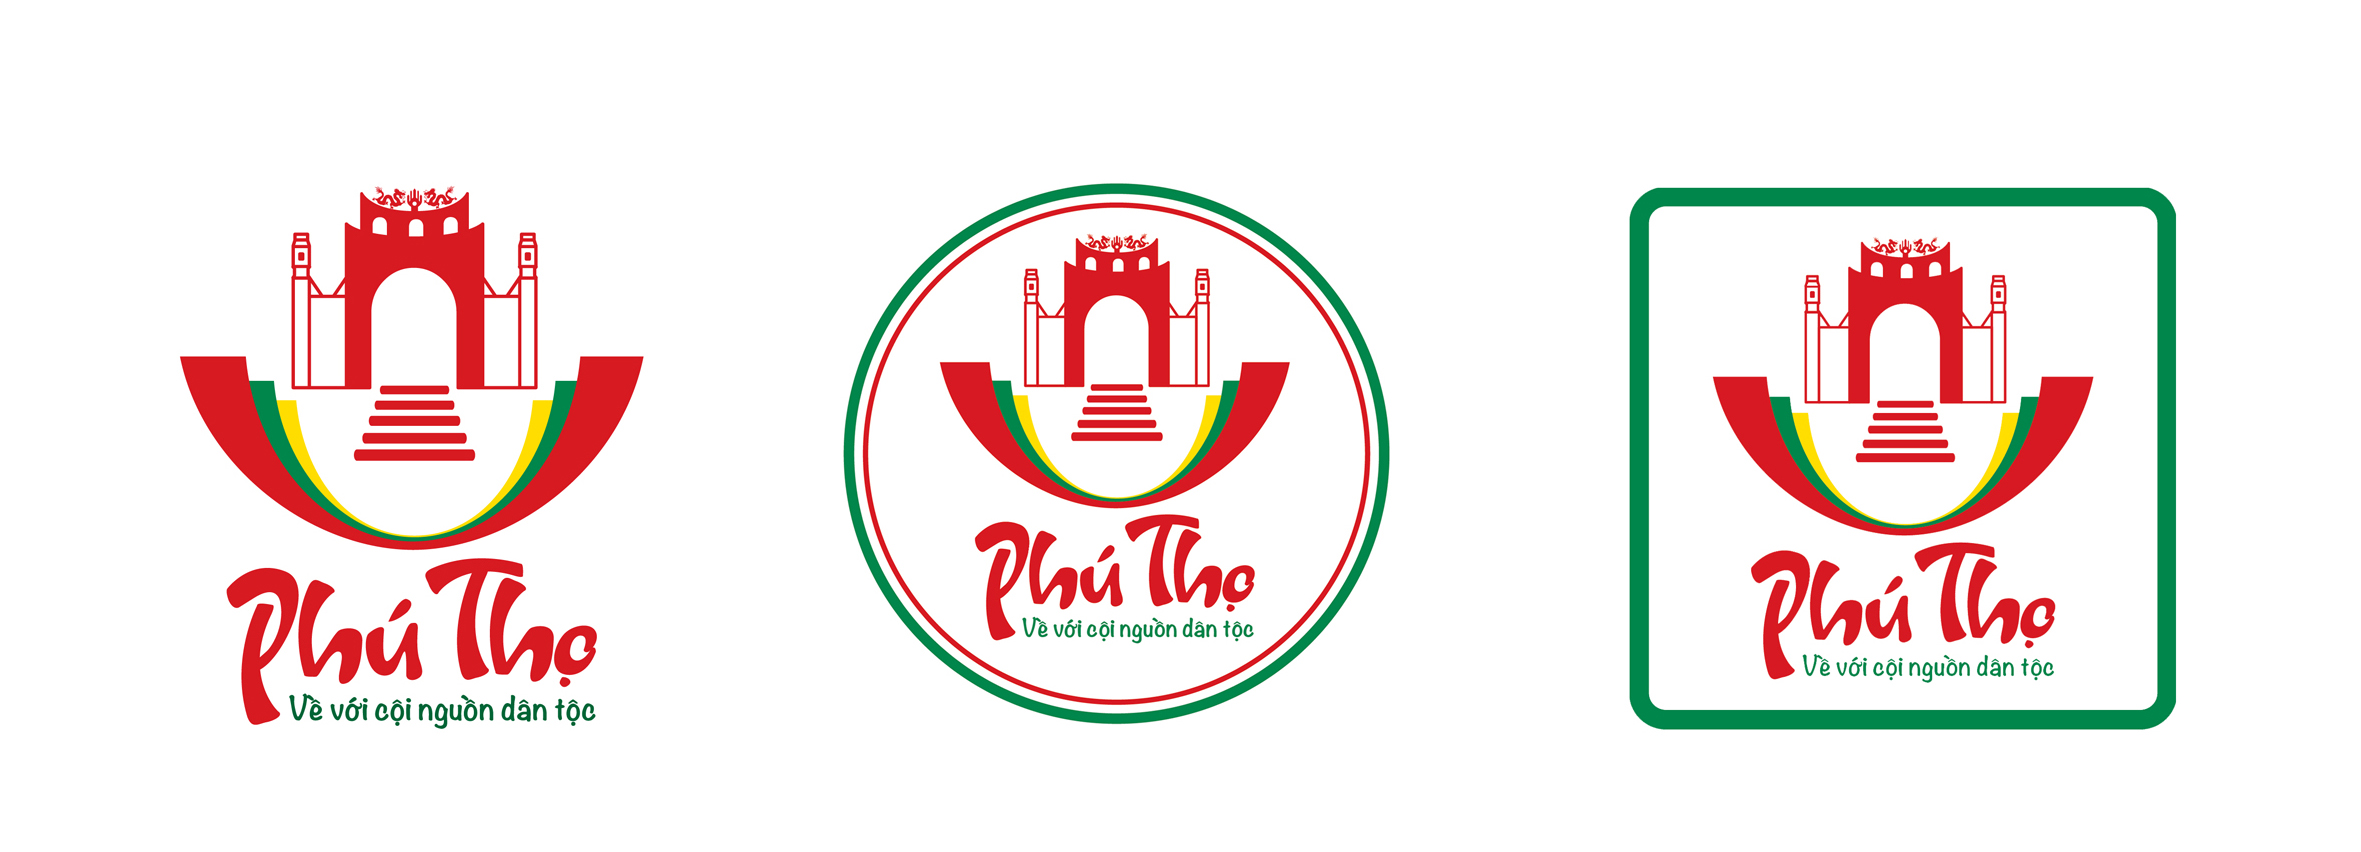 logo du lich phu tho